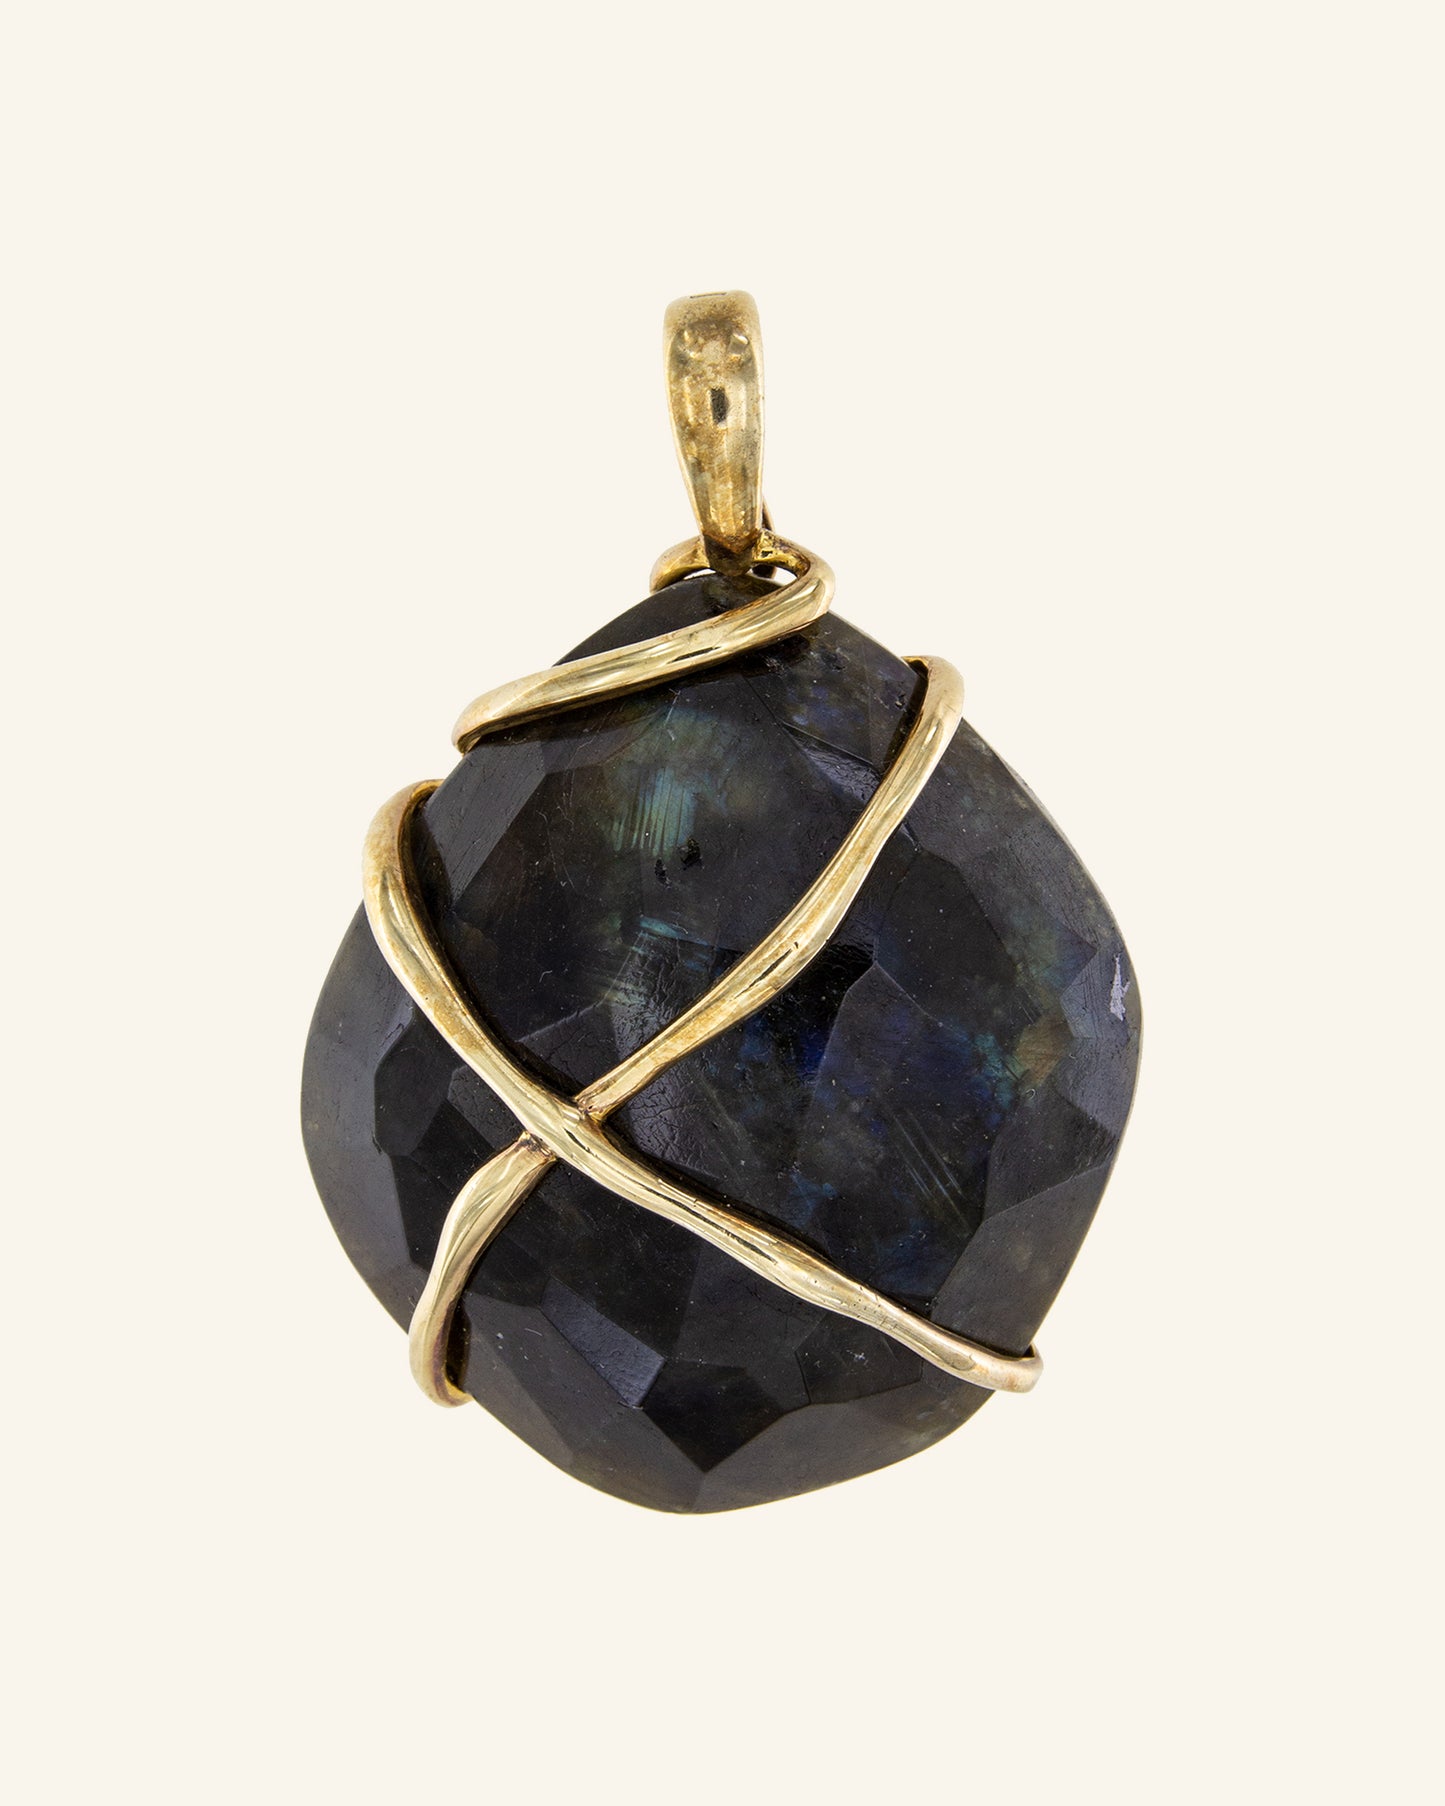 Meteorite pendant with labradorite